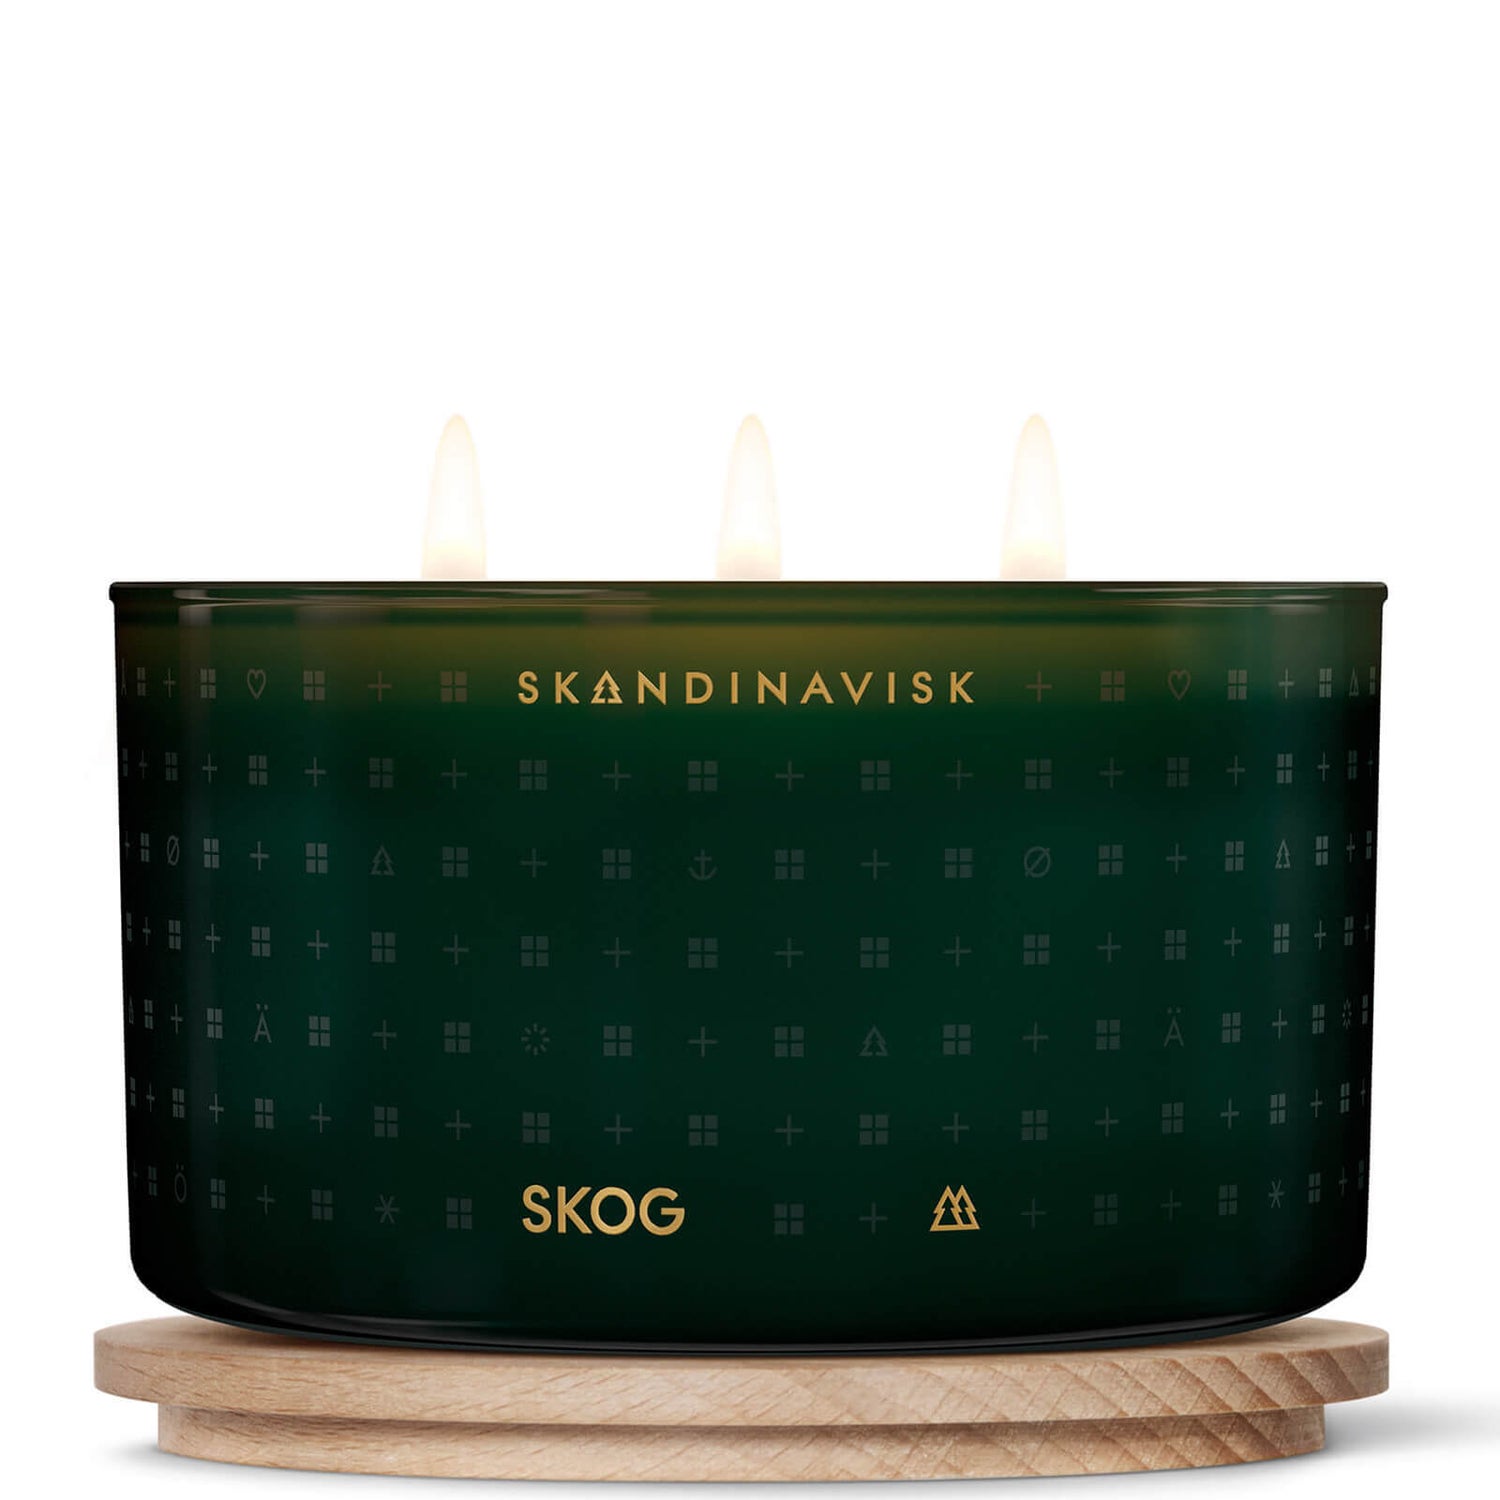 SKANDINAVISK Scented 3 Wick Candle - Skog - 475g